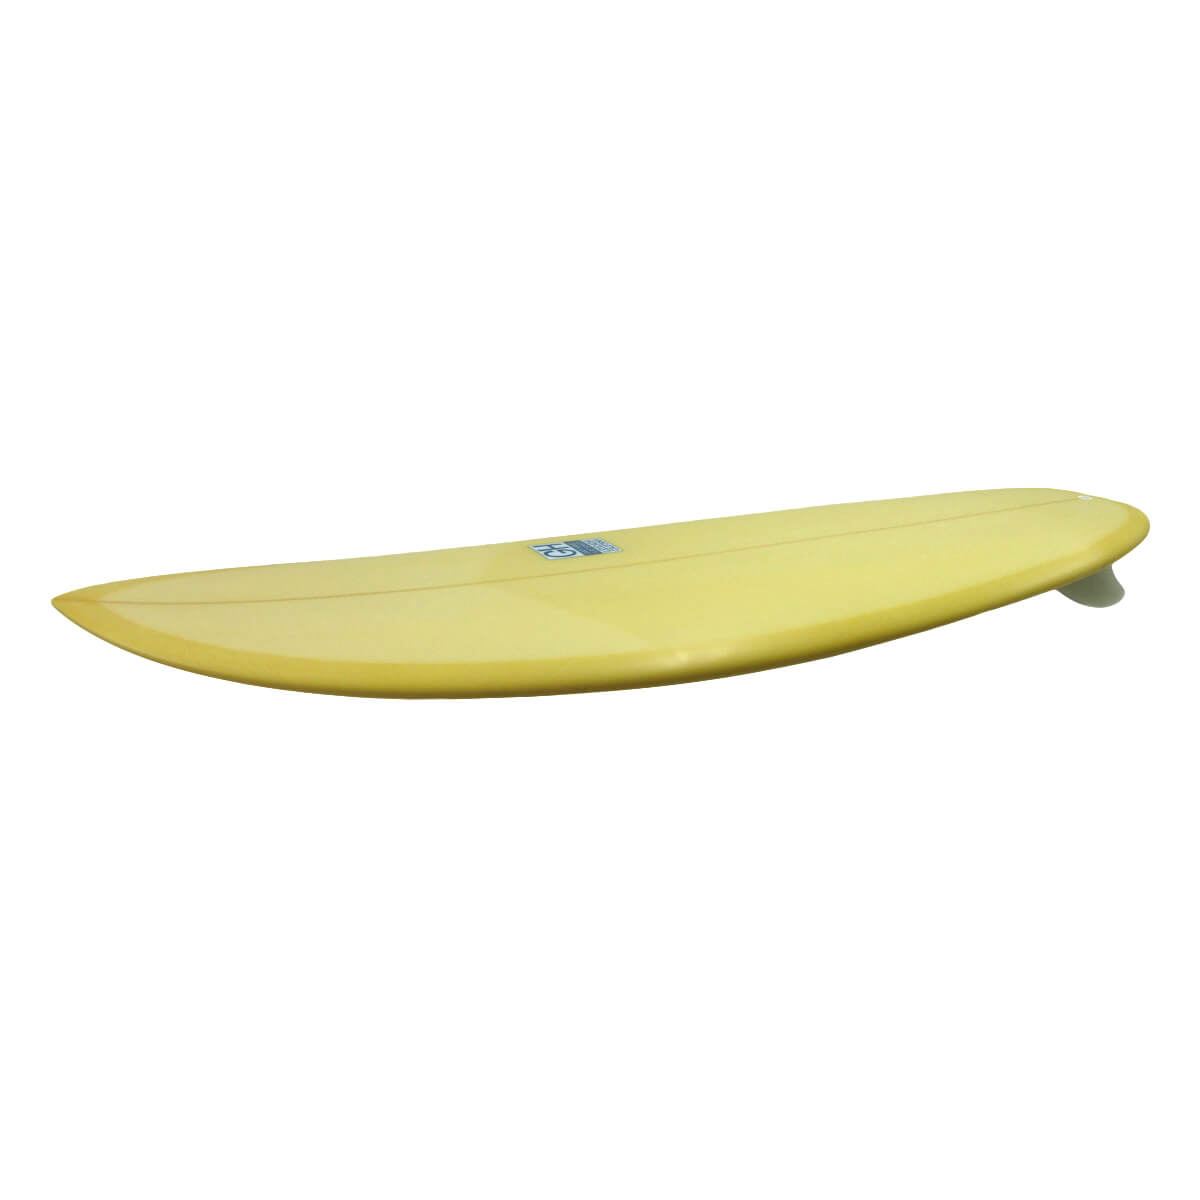 Gary Hanel Surfboards : PILL TWIN